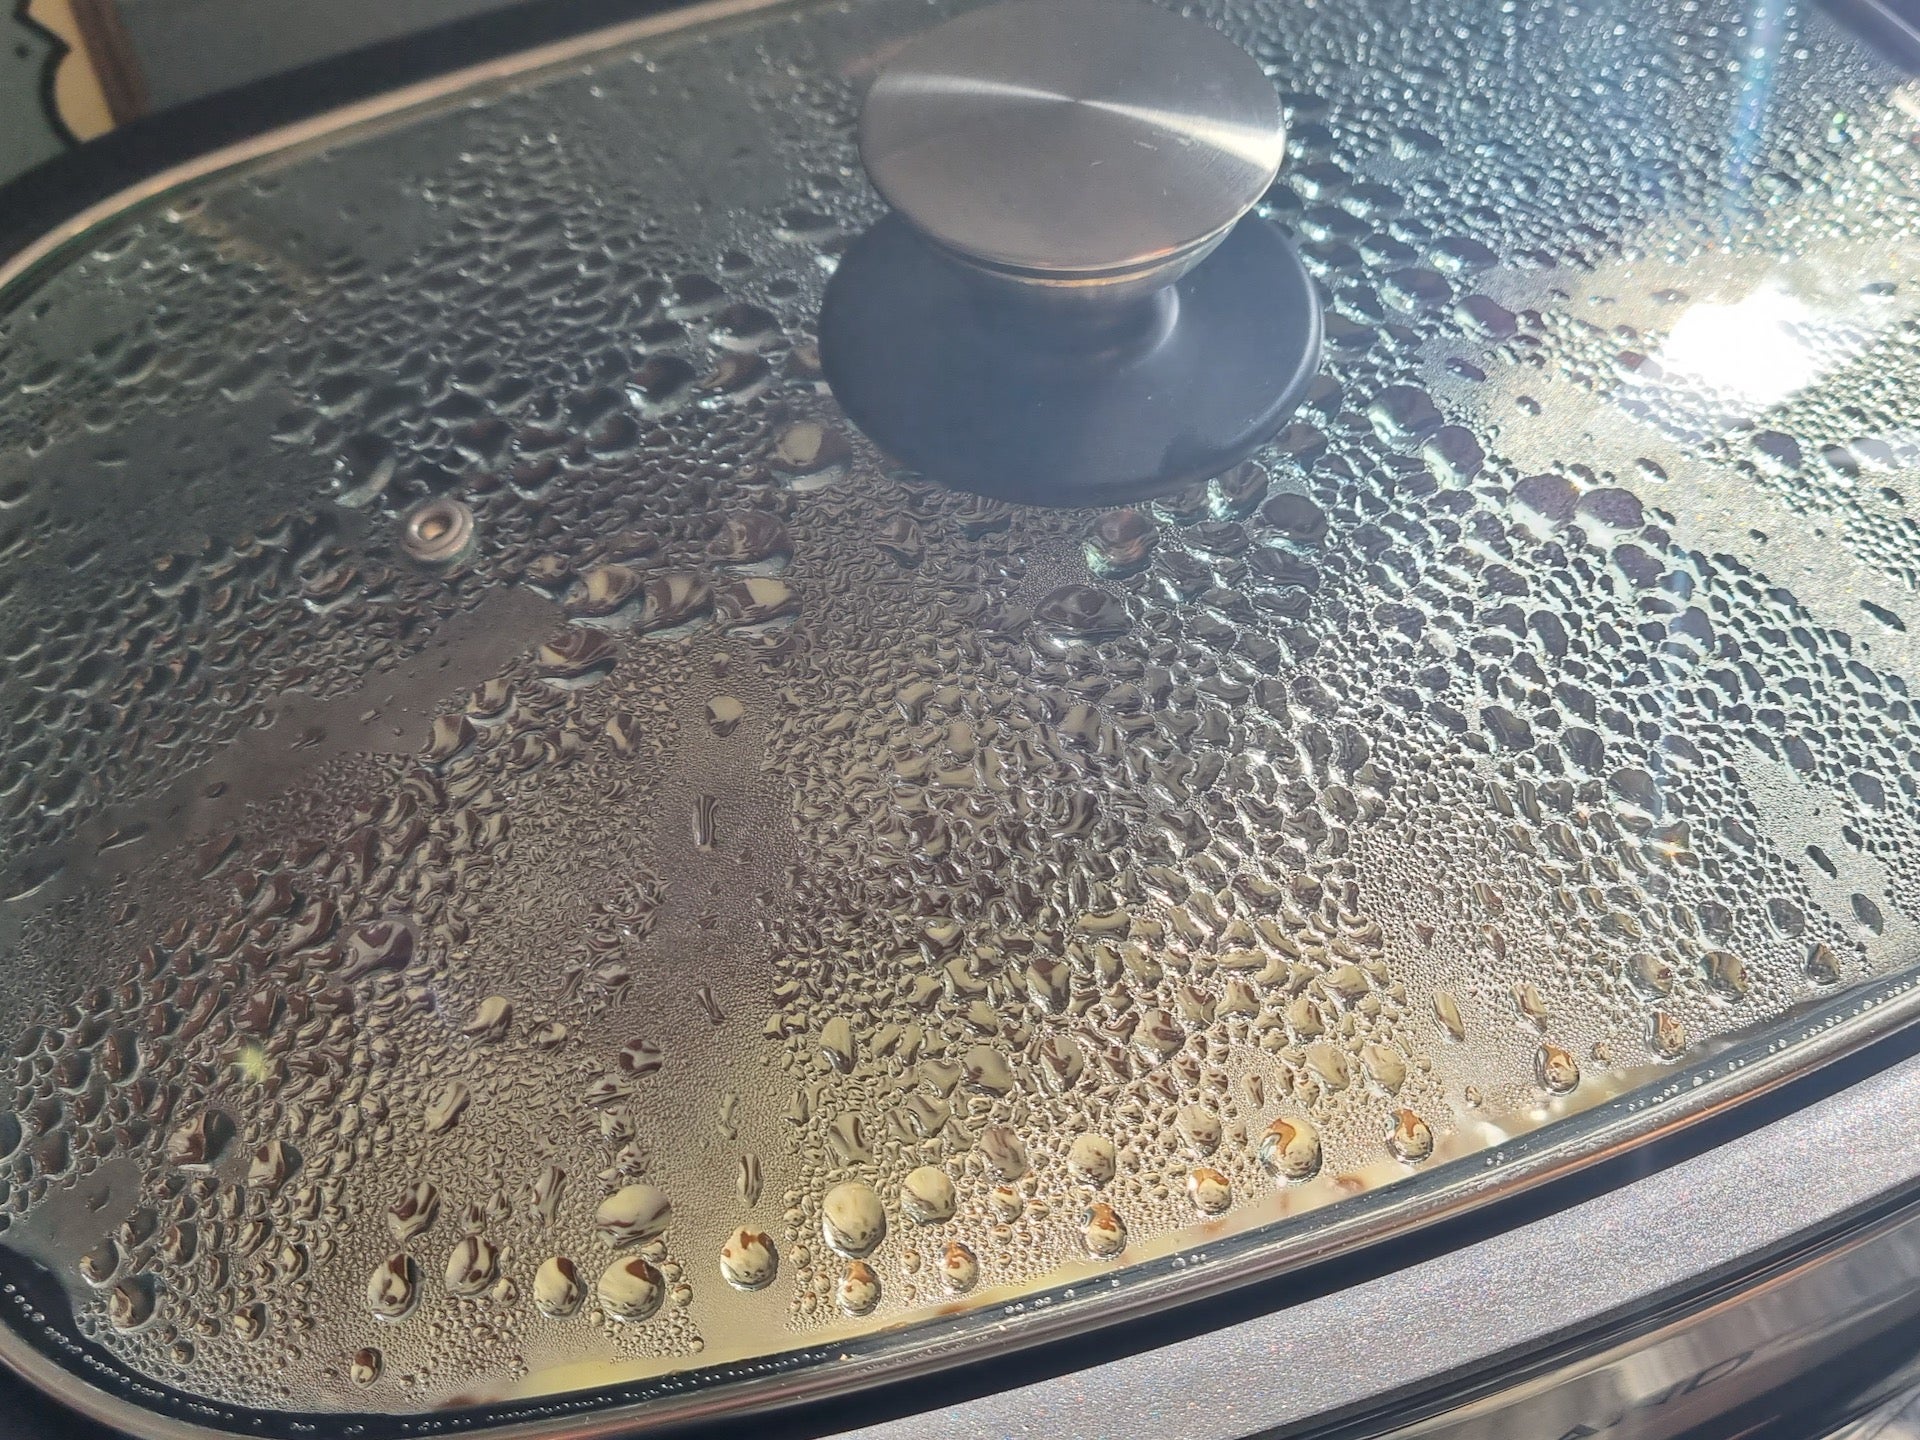 Condensación de olla de cocción lenta abrasadora Lakeland de 6,5 litros